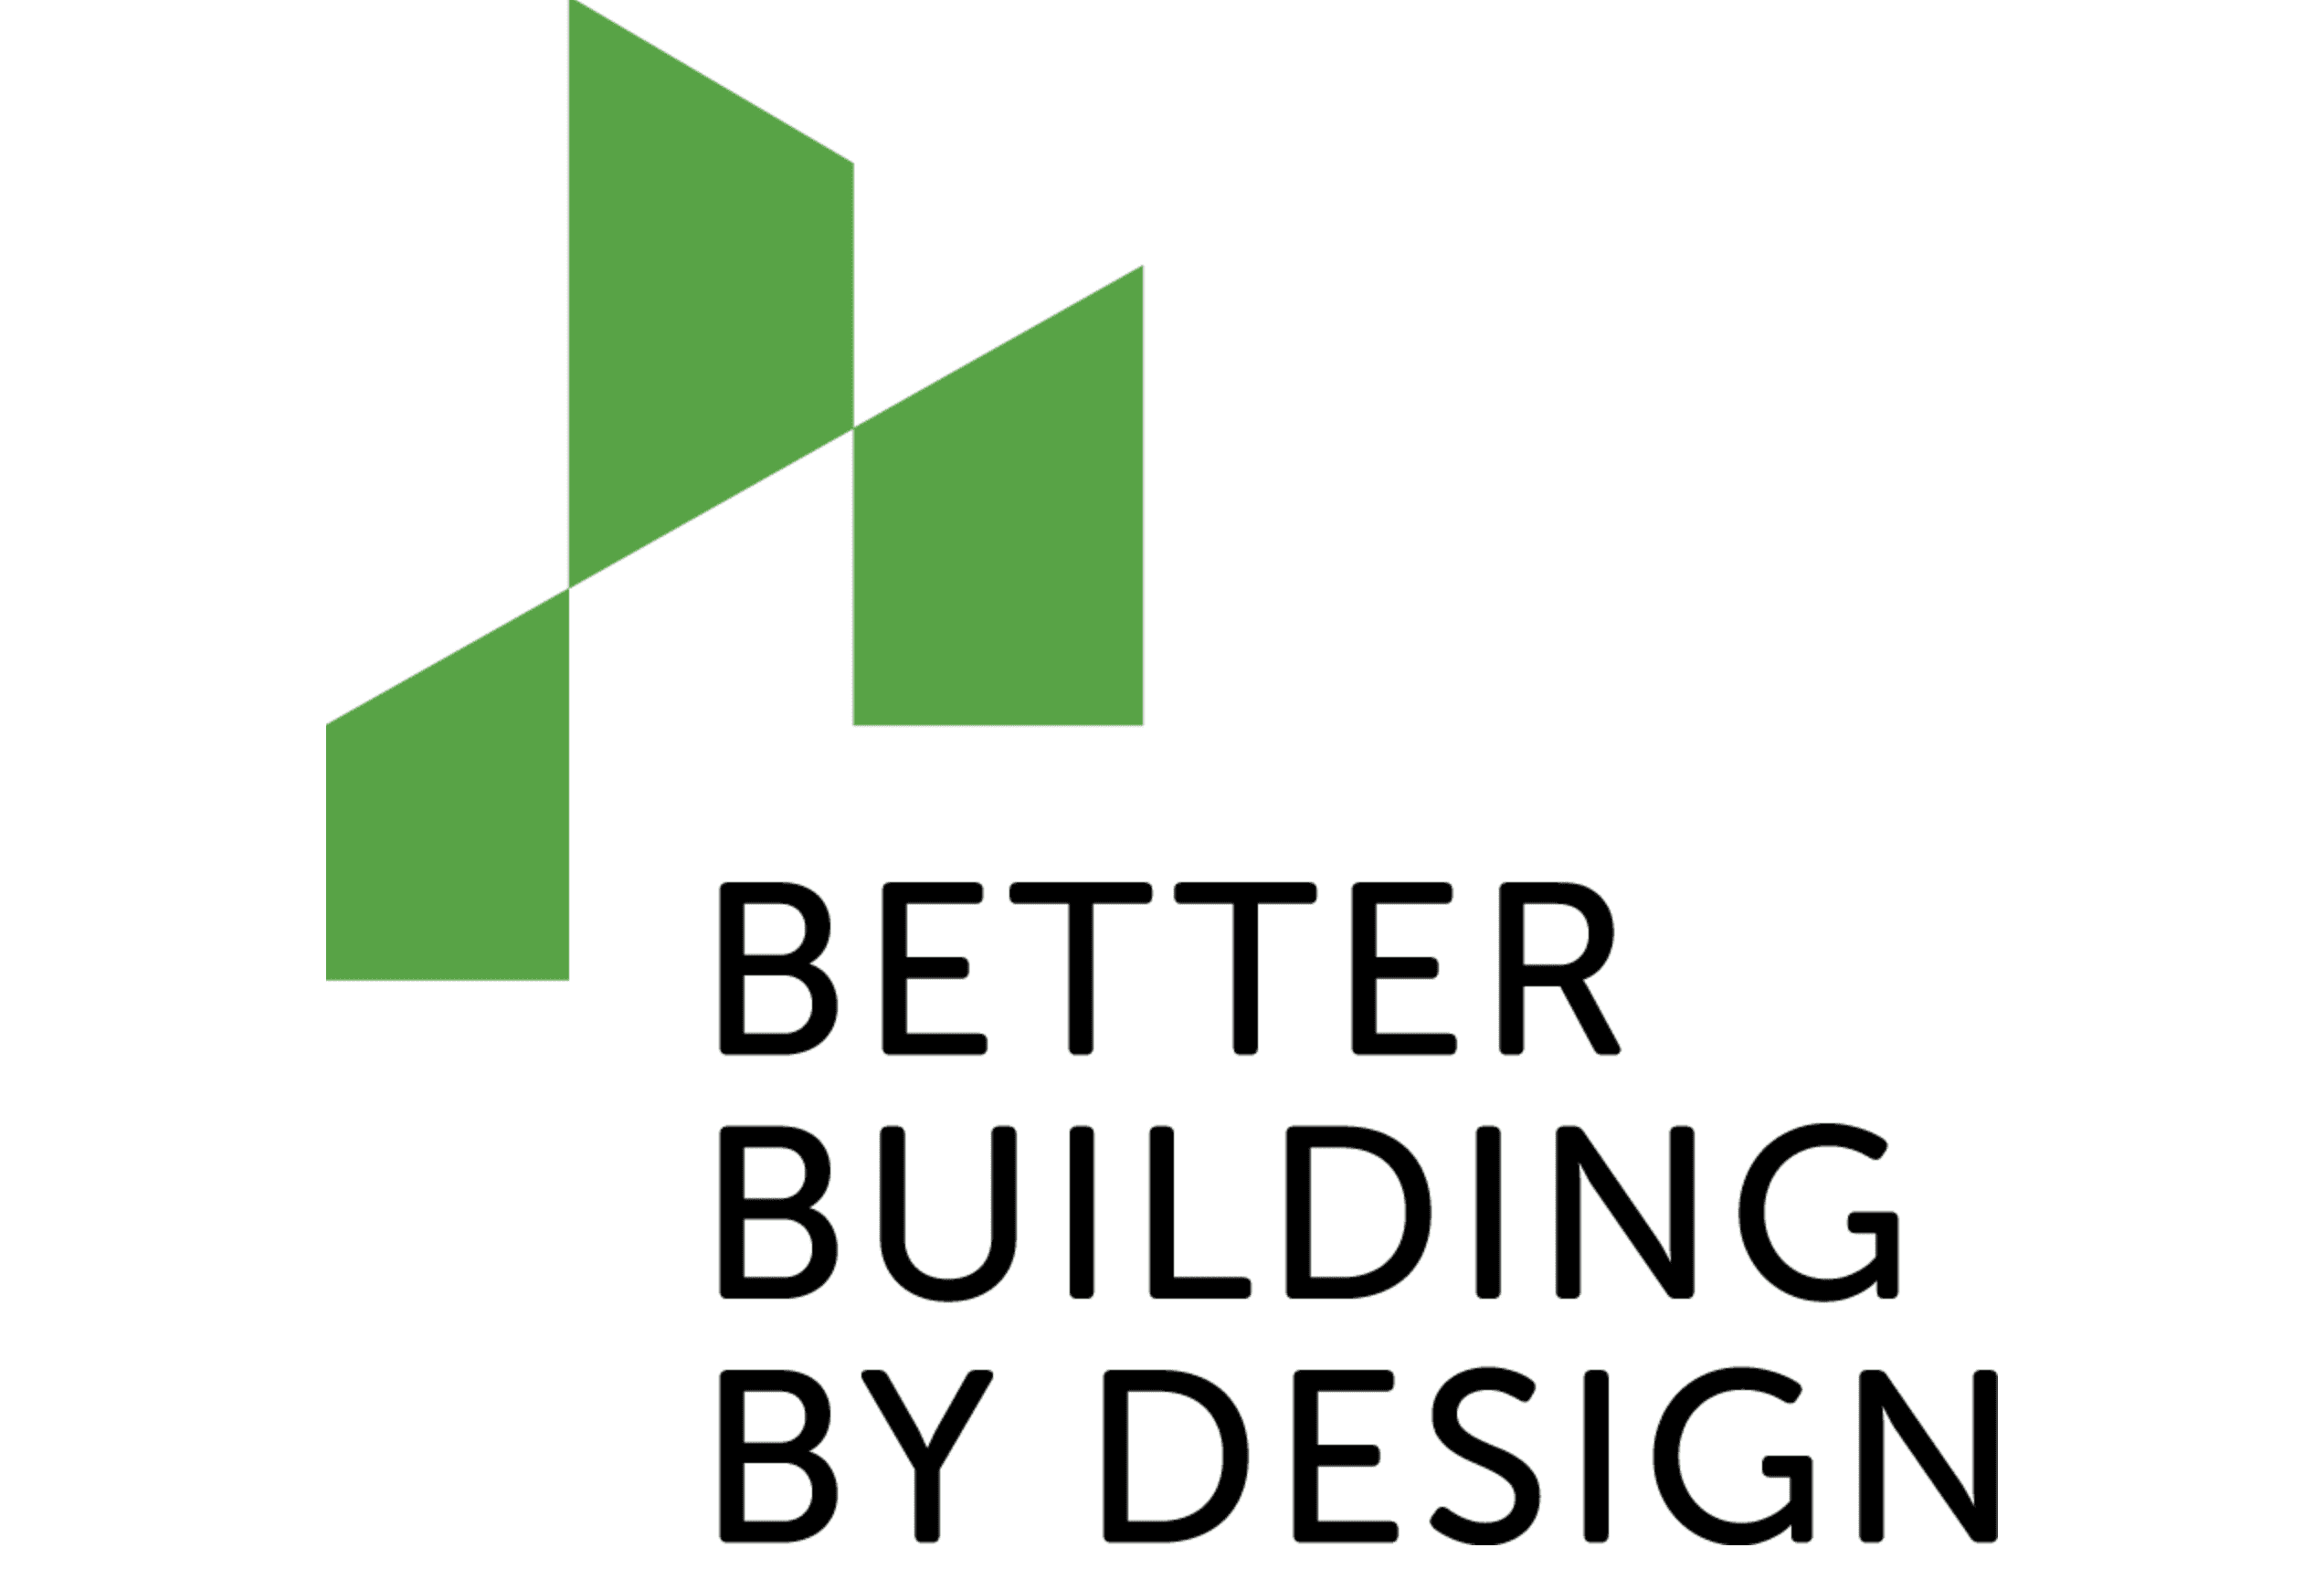 Better Buildings by Design logo